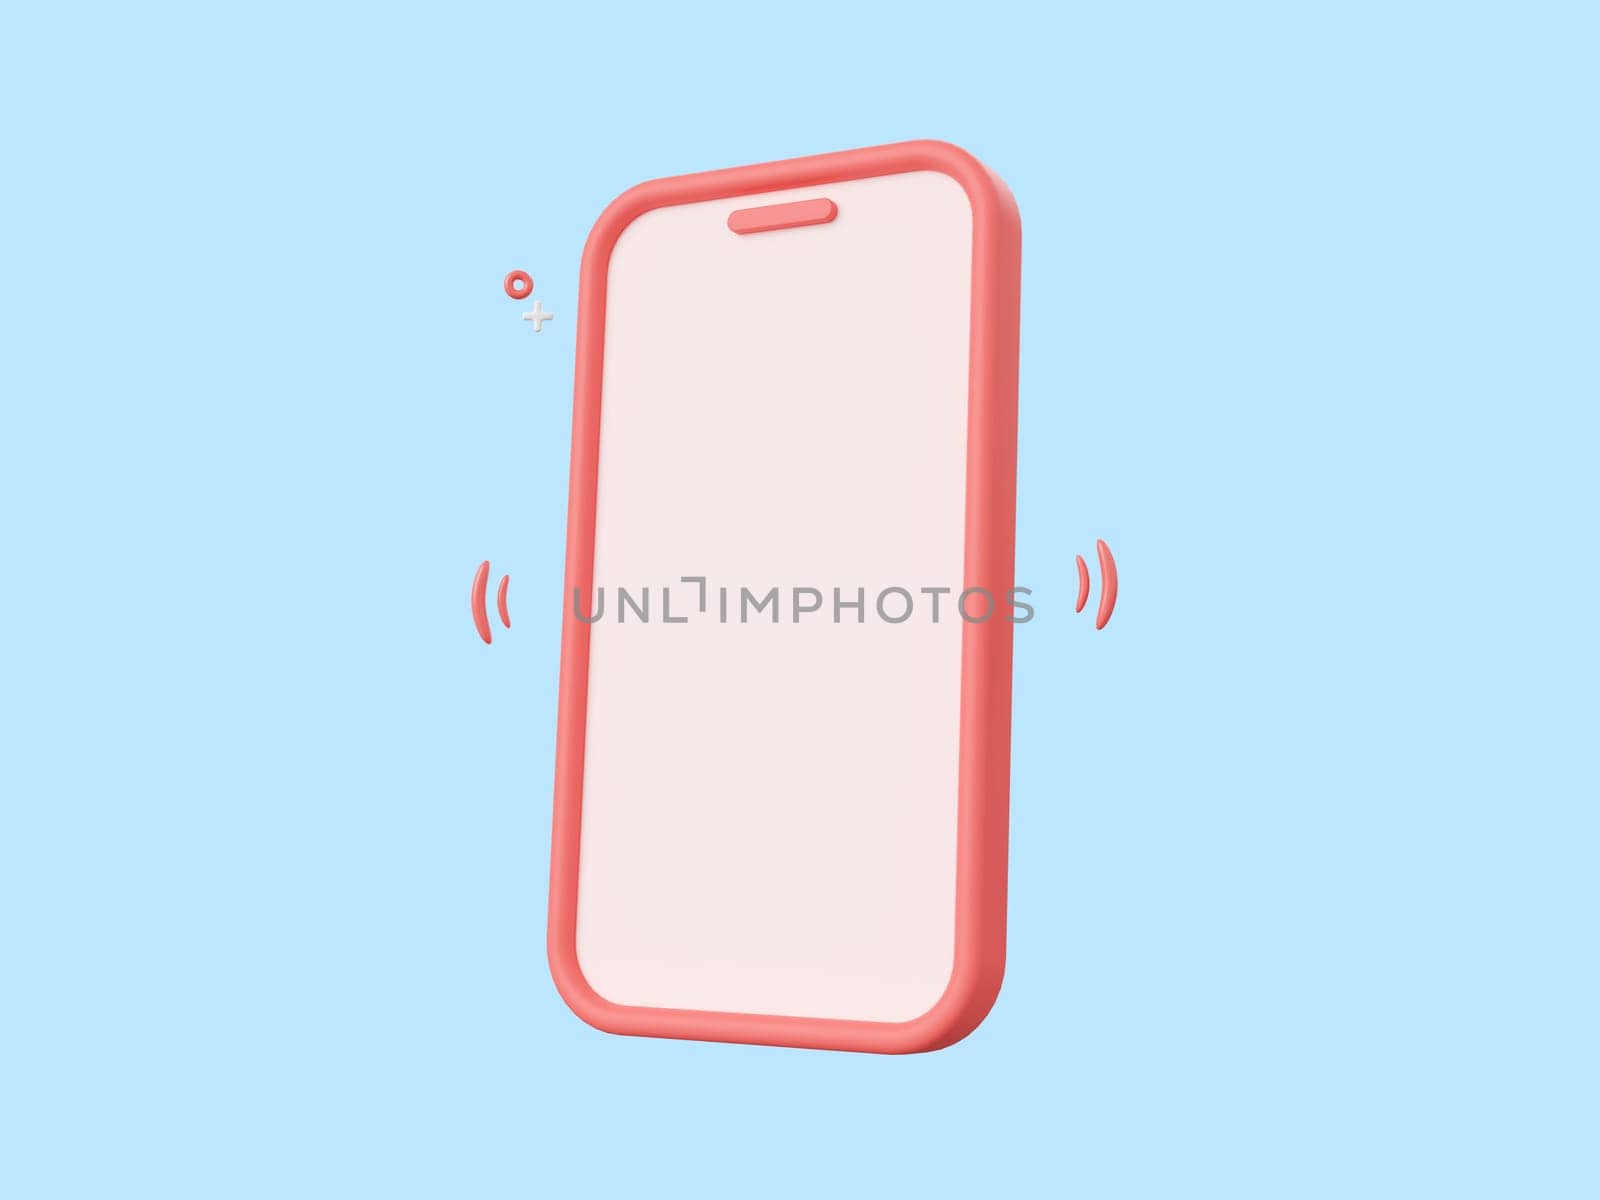 Smartphone mockup 3d cartoon icon isolated on blue background, 3d illustration.